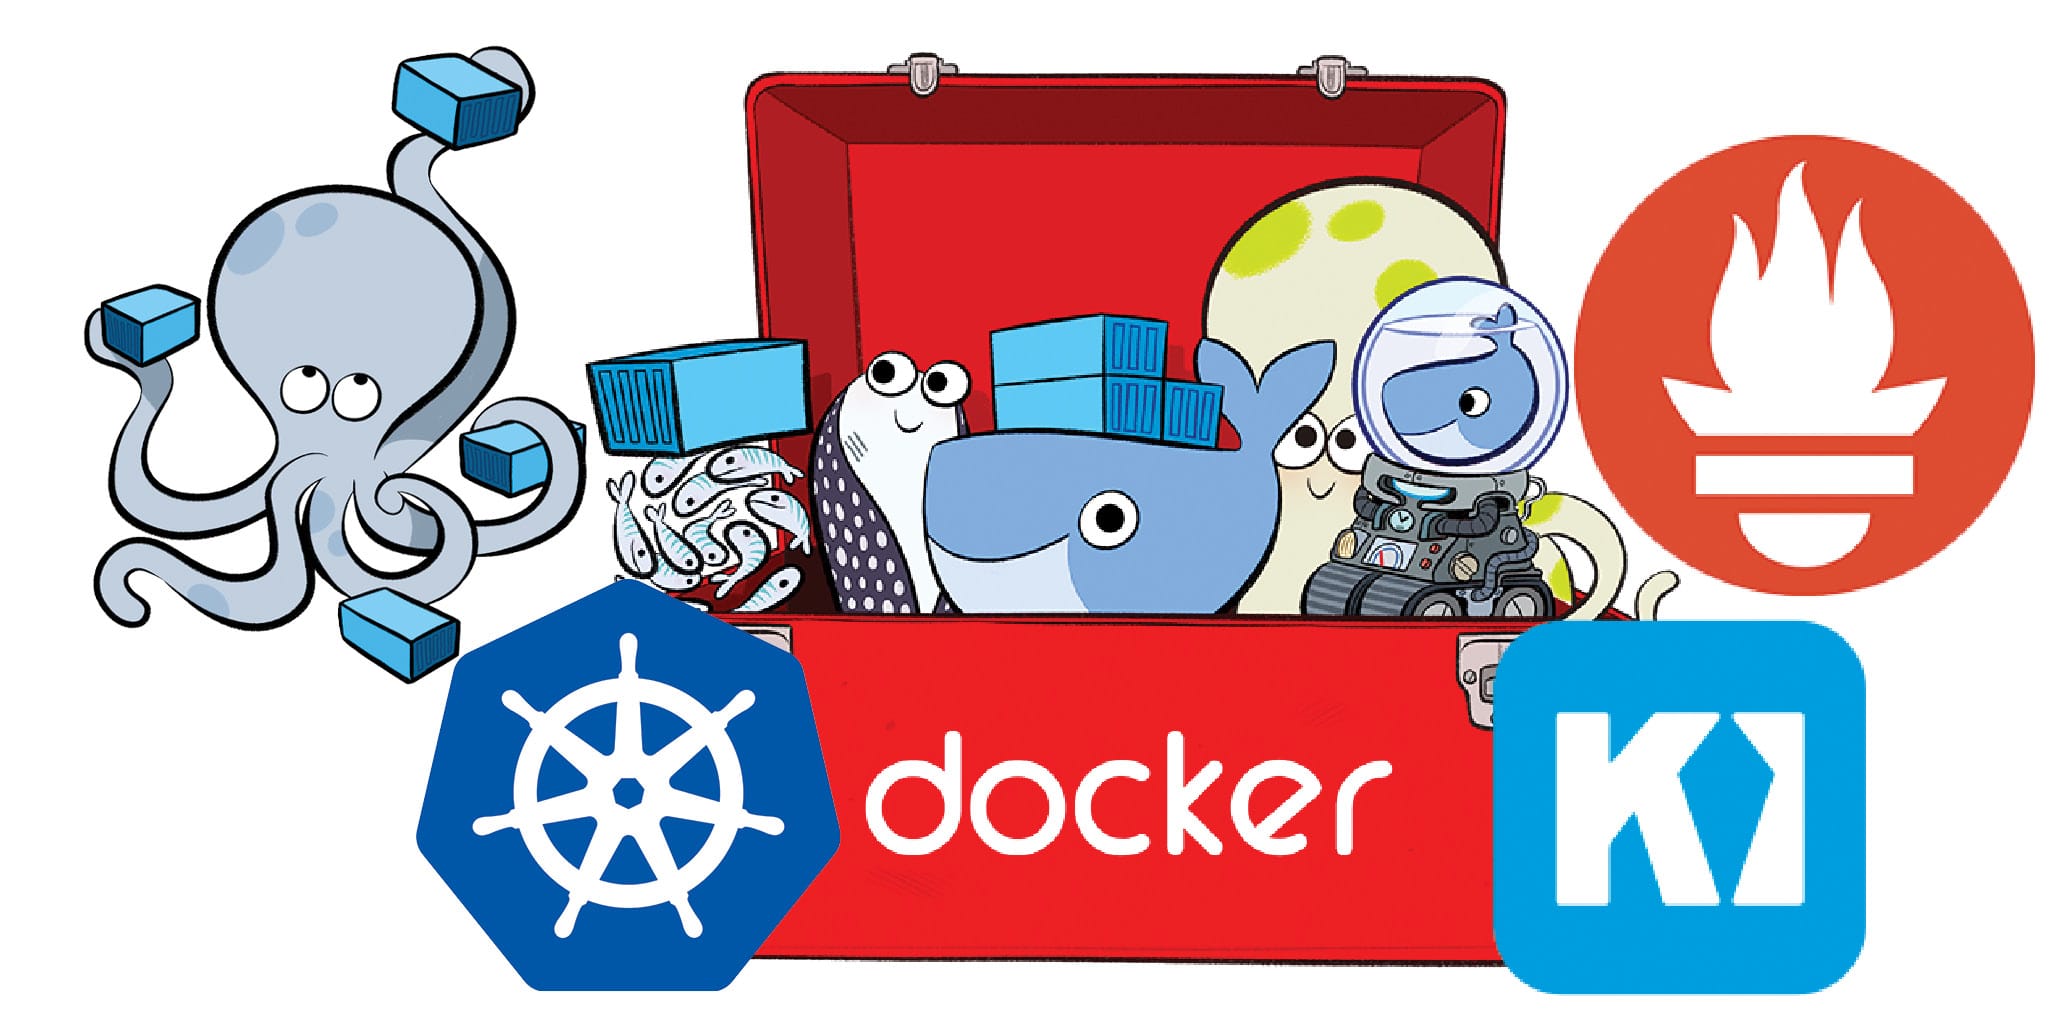 Docker Toolbox. Докер клипарт. Docker backup